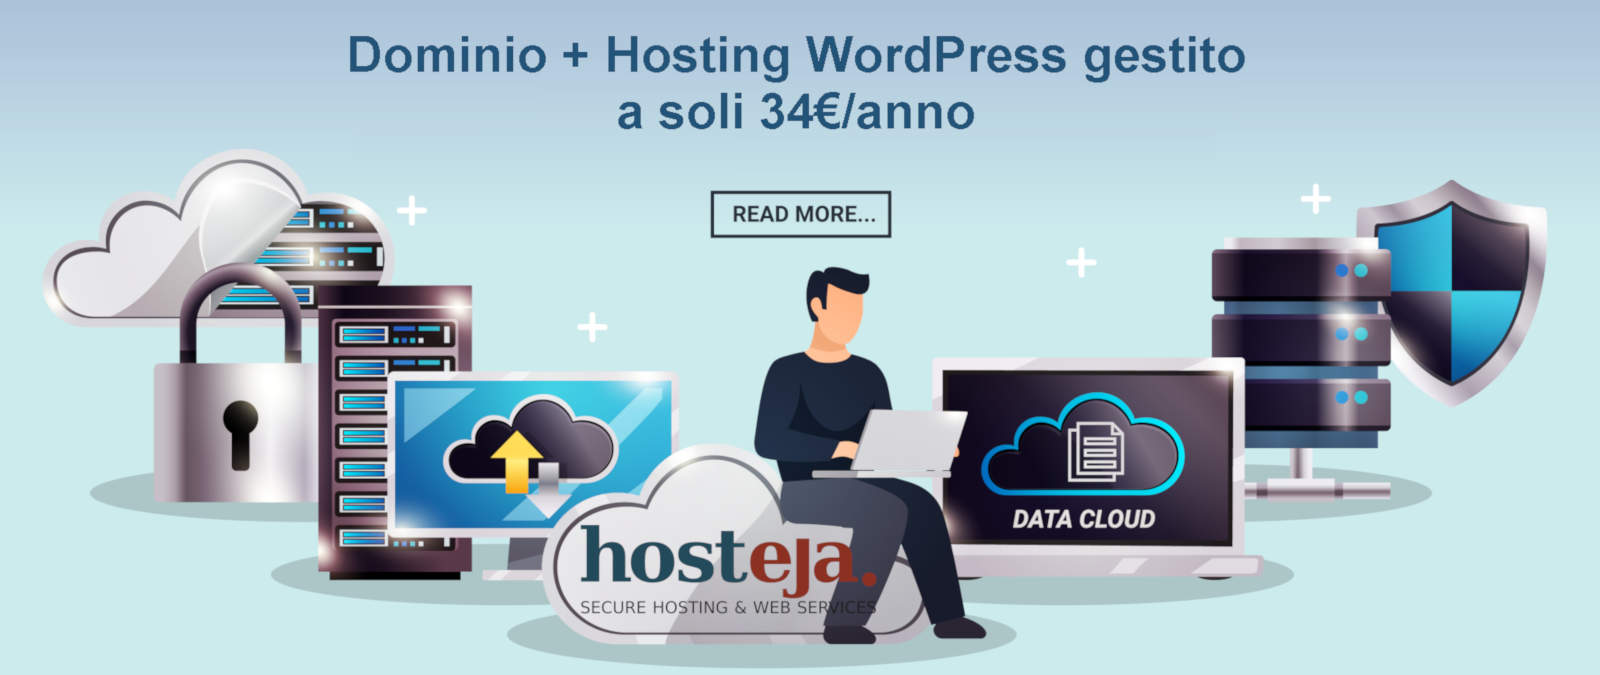 Dominio + Hosting WordPress gestito, Hosteja.com - Hosting Service Provider